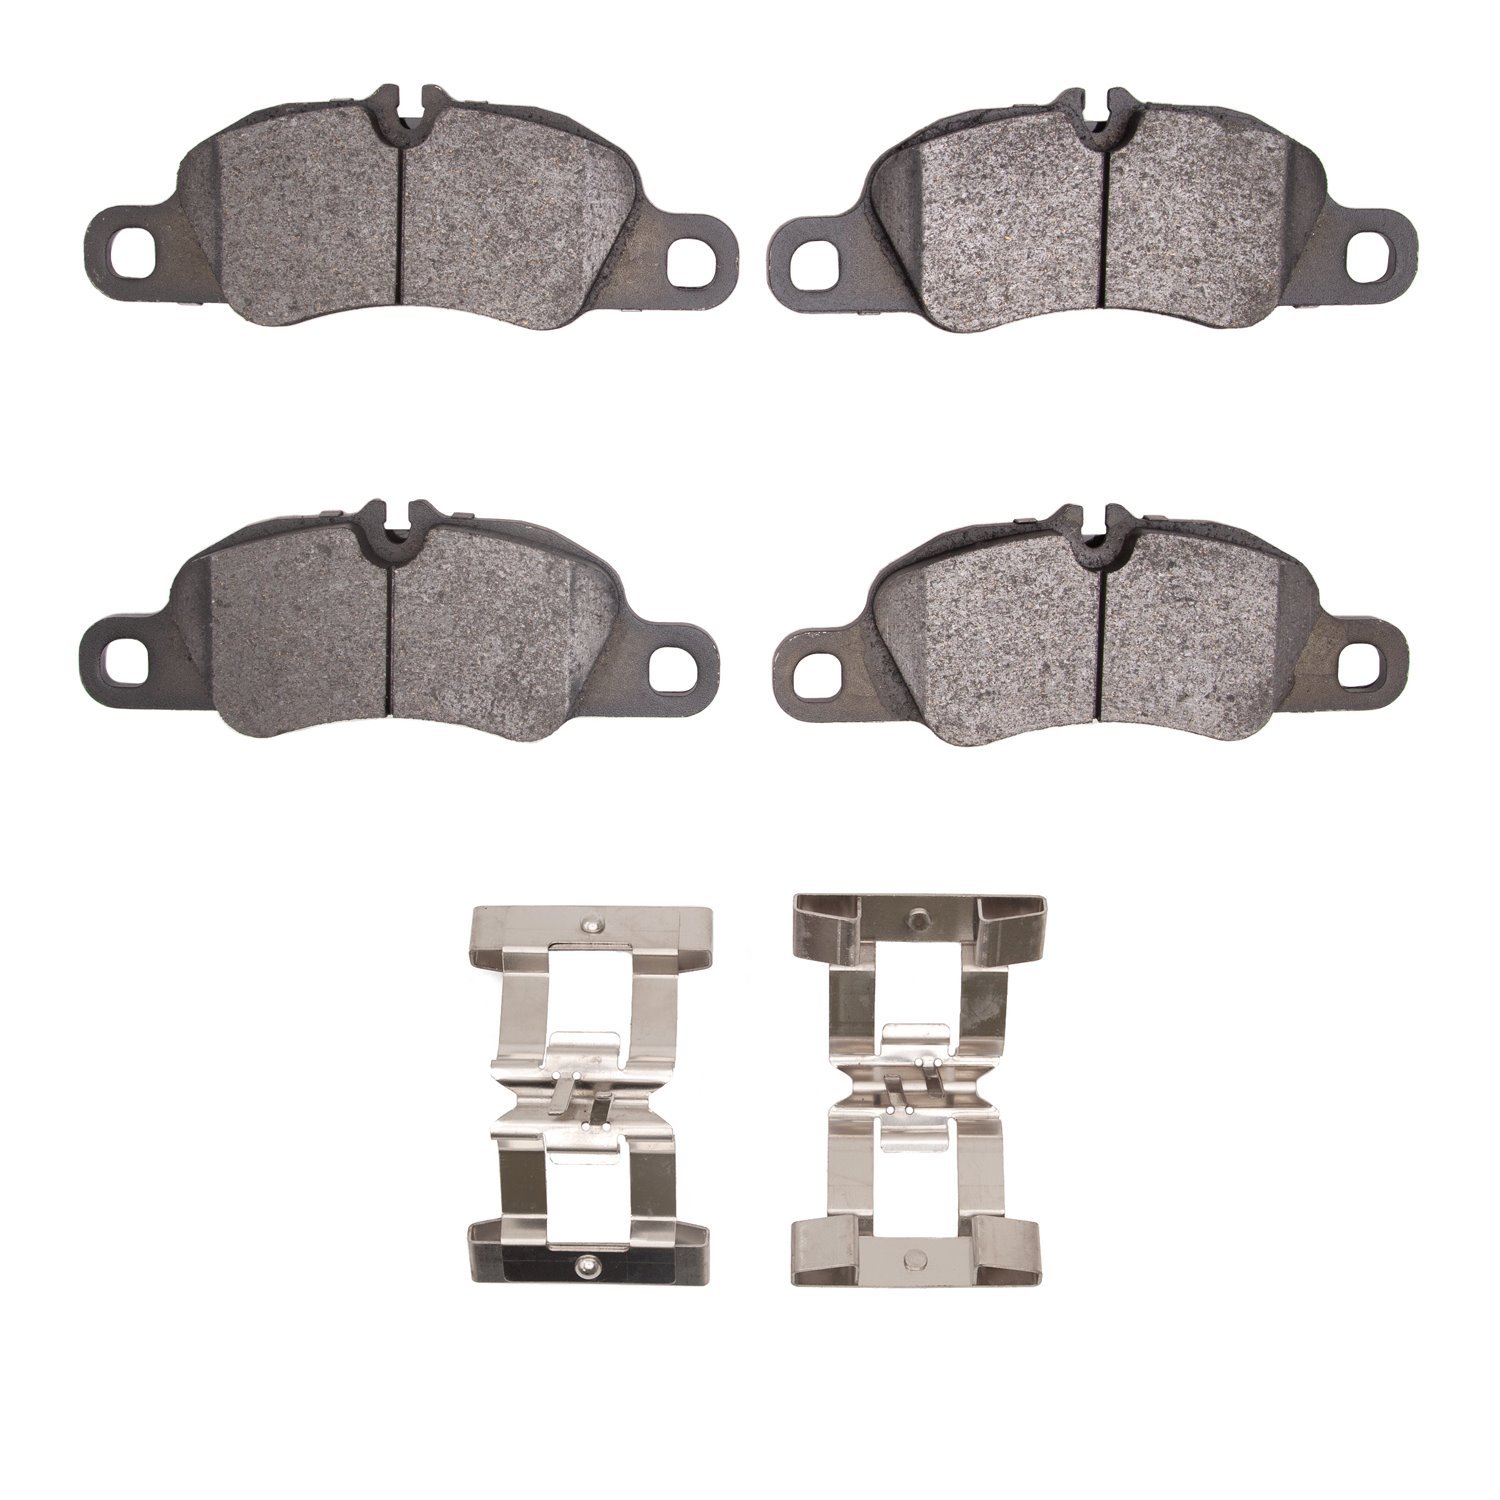 1551-1389-01 5000 Advanced Low-Metallic Brake Pads & Hardware Kit, Fits Select Porsche, Position: Front